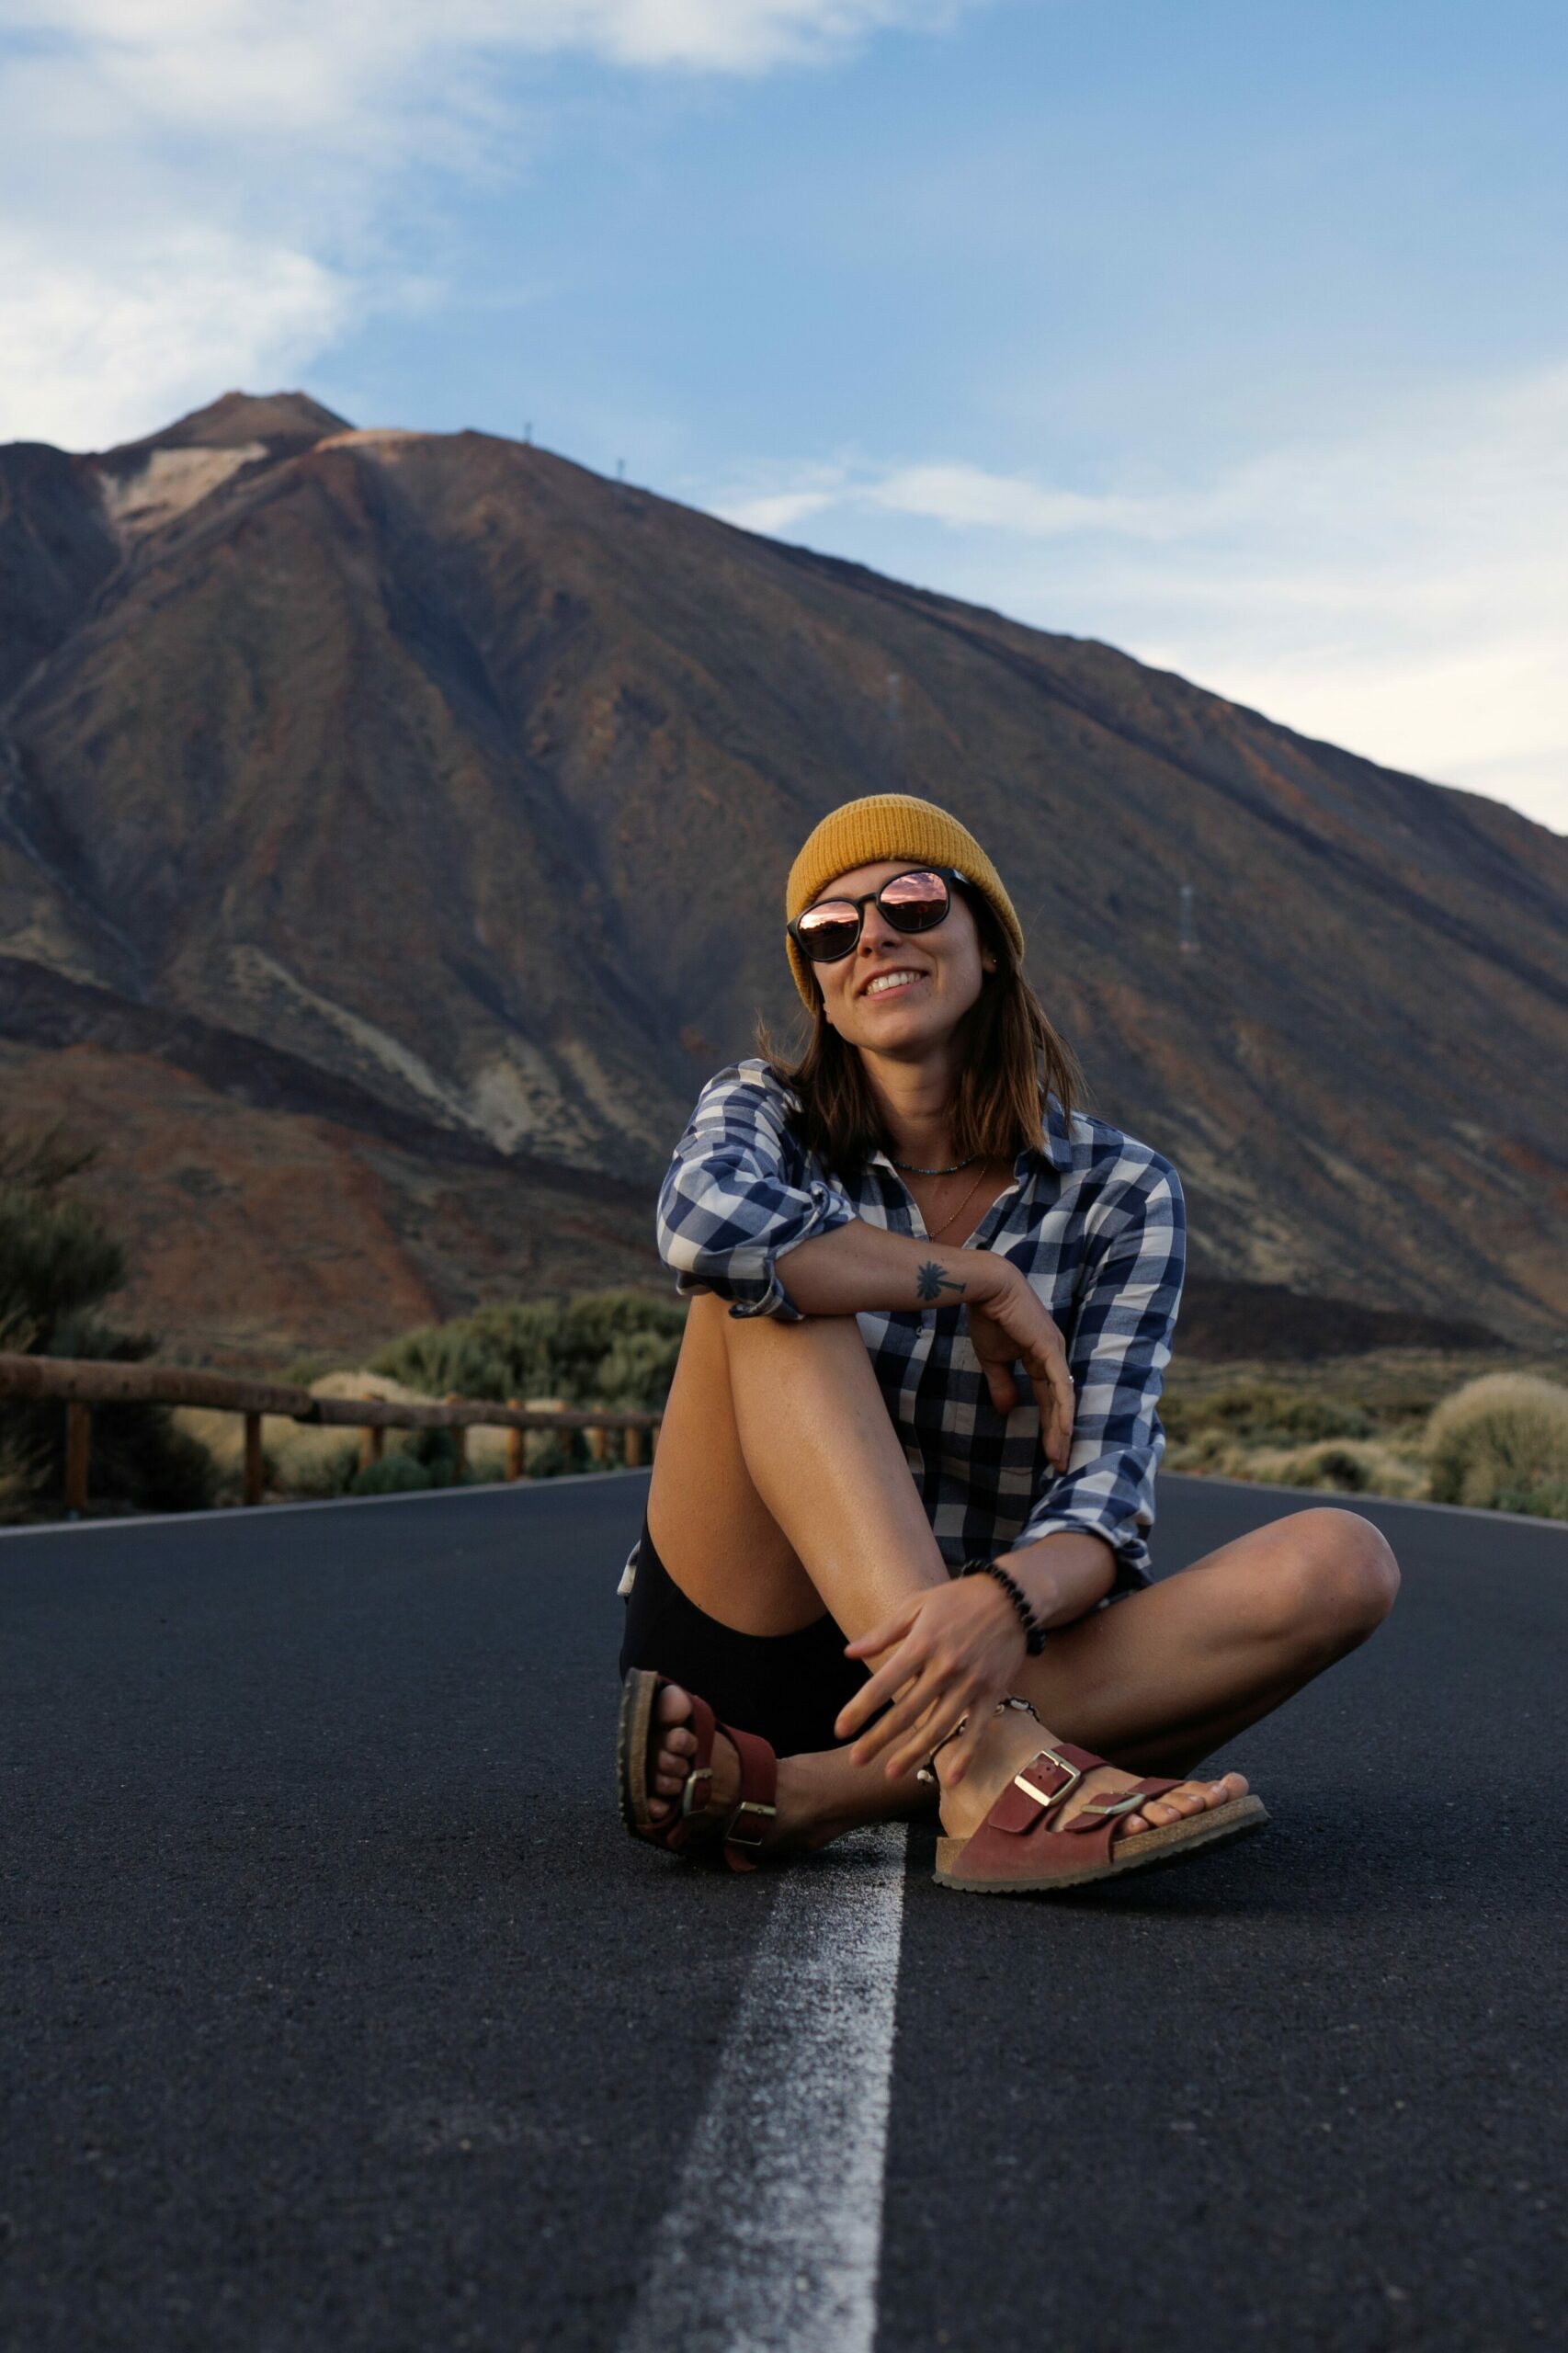 Ewa na drodze, a w tle wulkan Teide - Teneryfa